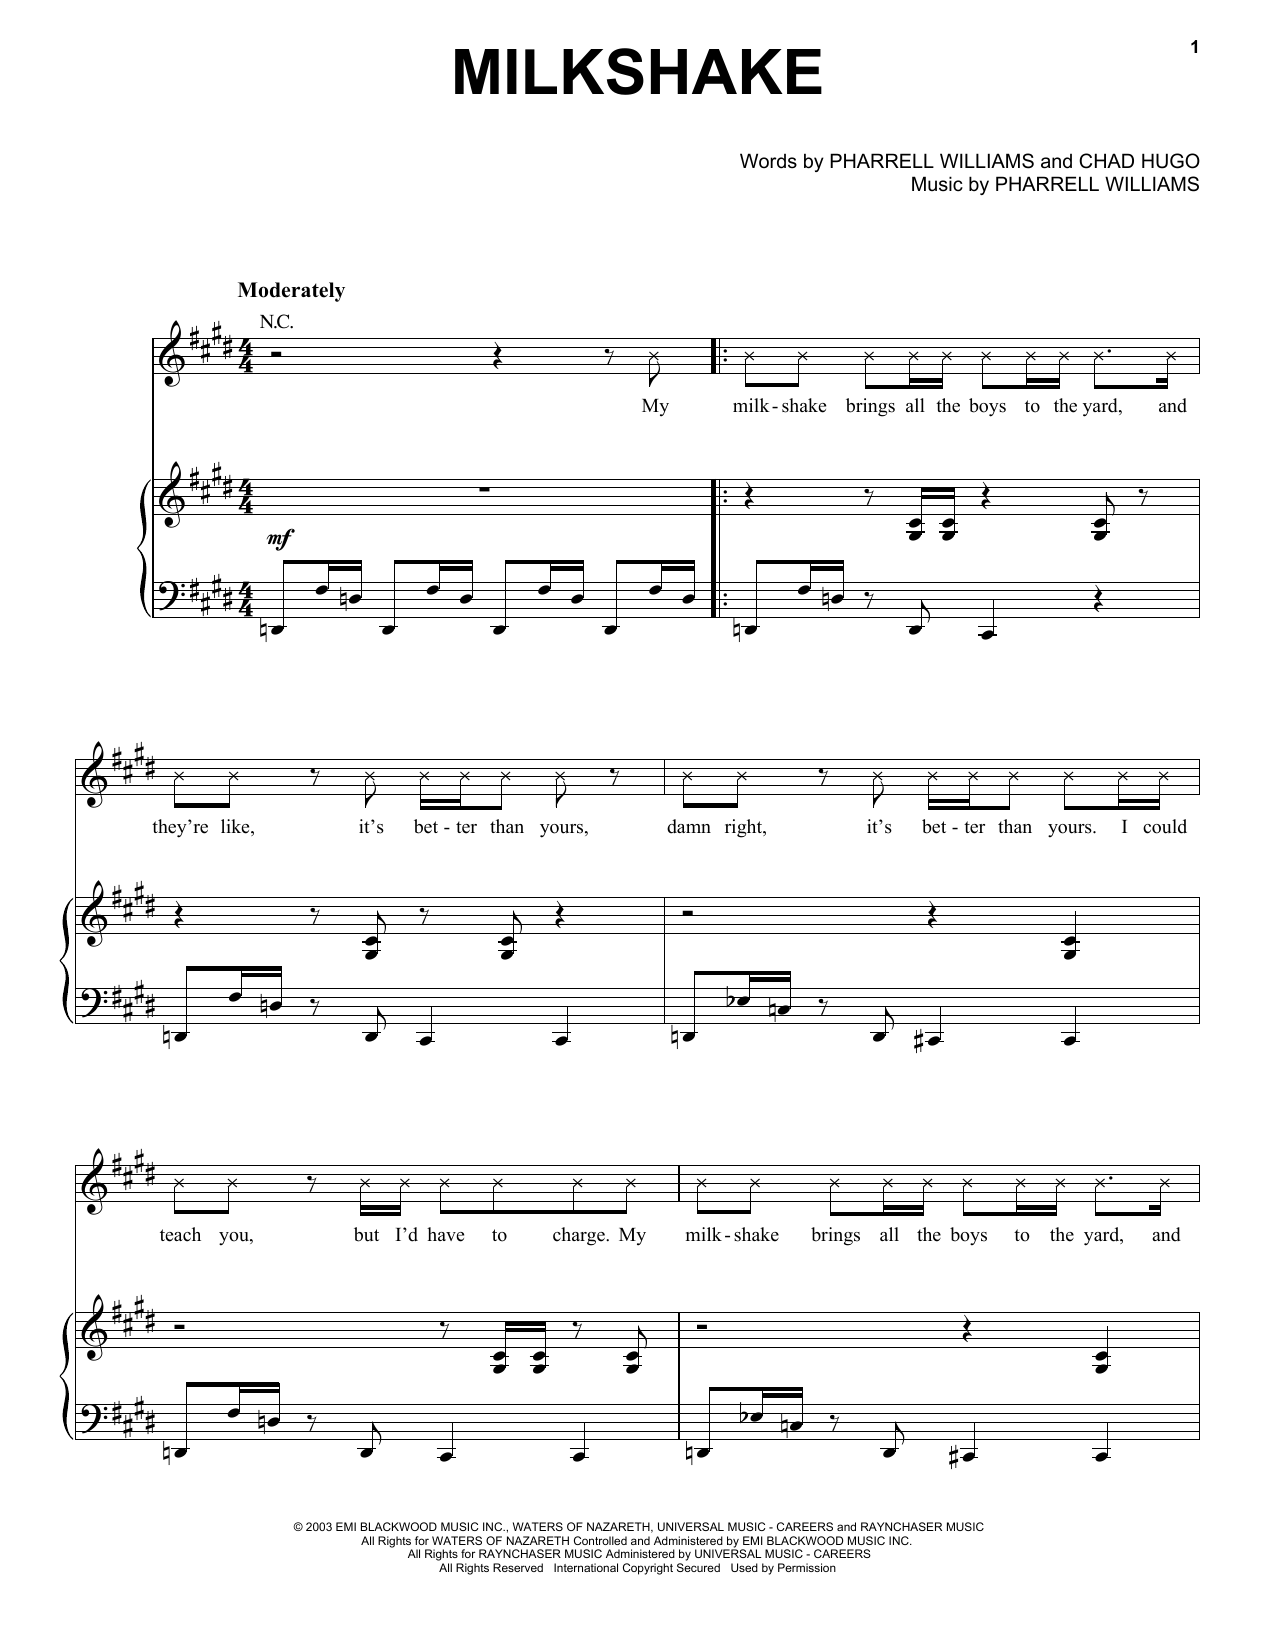 Download Kelis Milkshake Sheet Music and learn how to play Piano, Vocal & Guitar PDF digital score in minutes